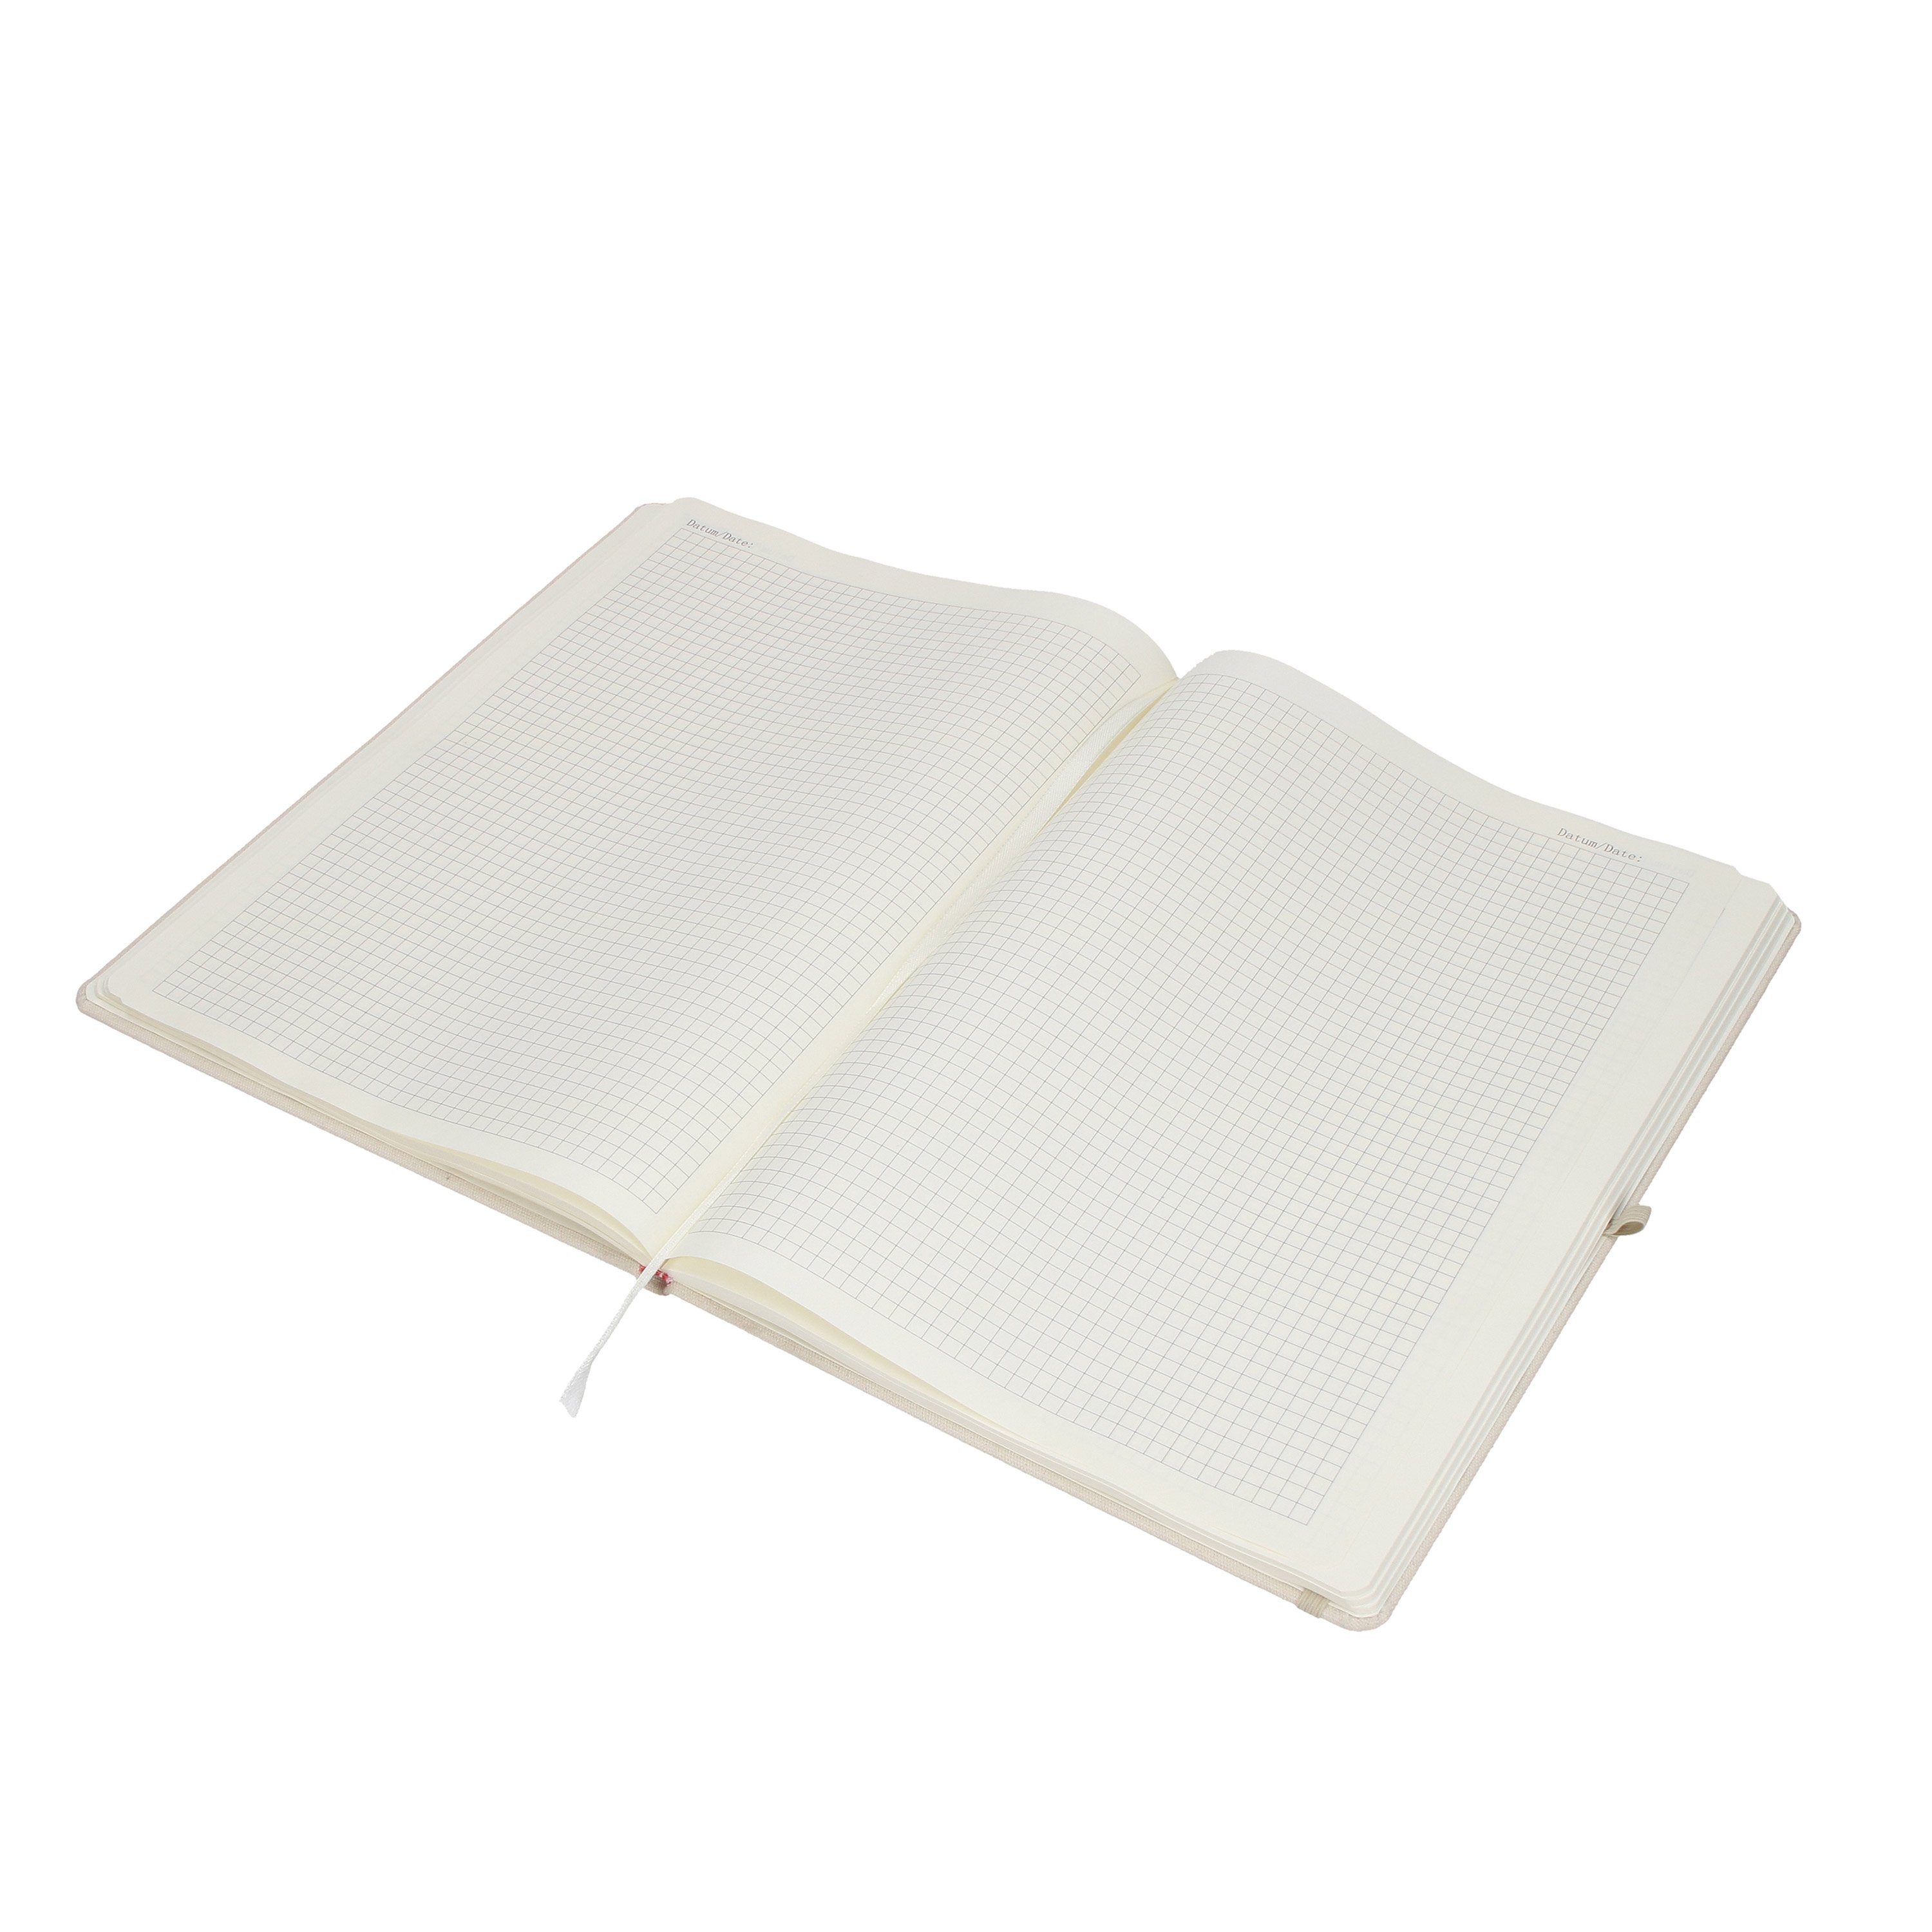 Mr. & - Notizbuch Mrs. Panda Mr. - Ein Transparent Journal, & BestFriends-Lemon Panda Mrs. Geschenk, Schreibbuch